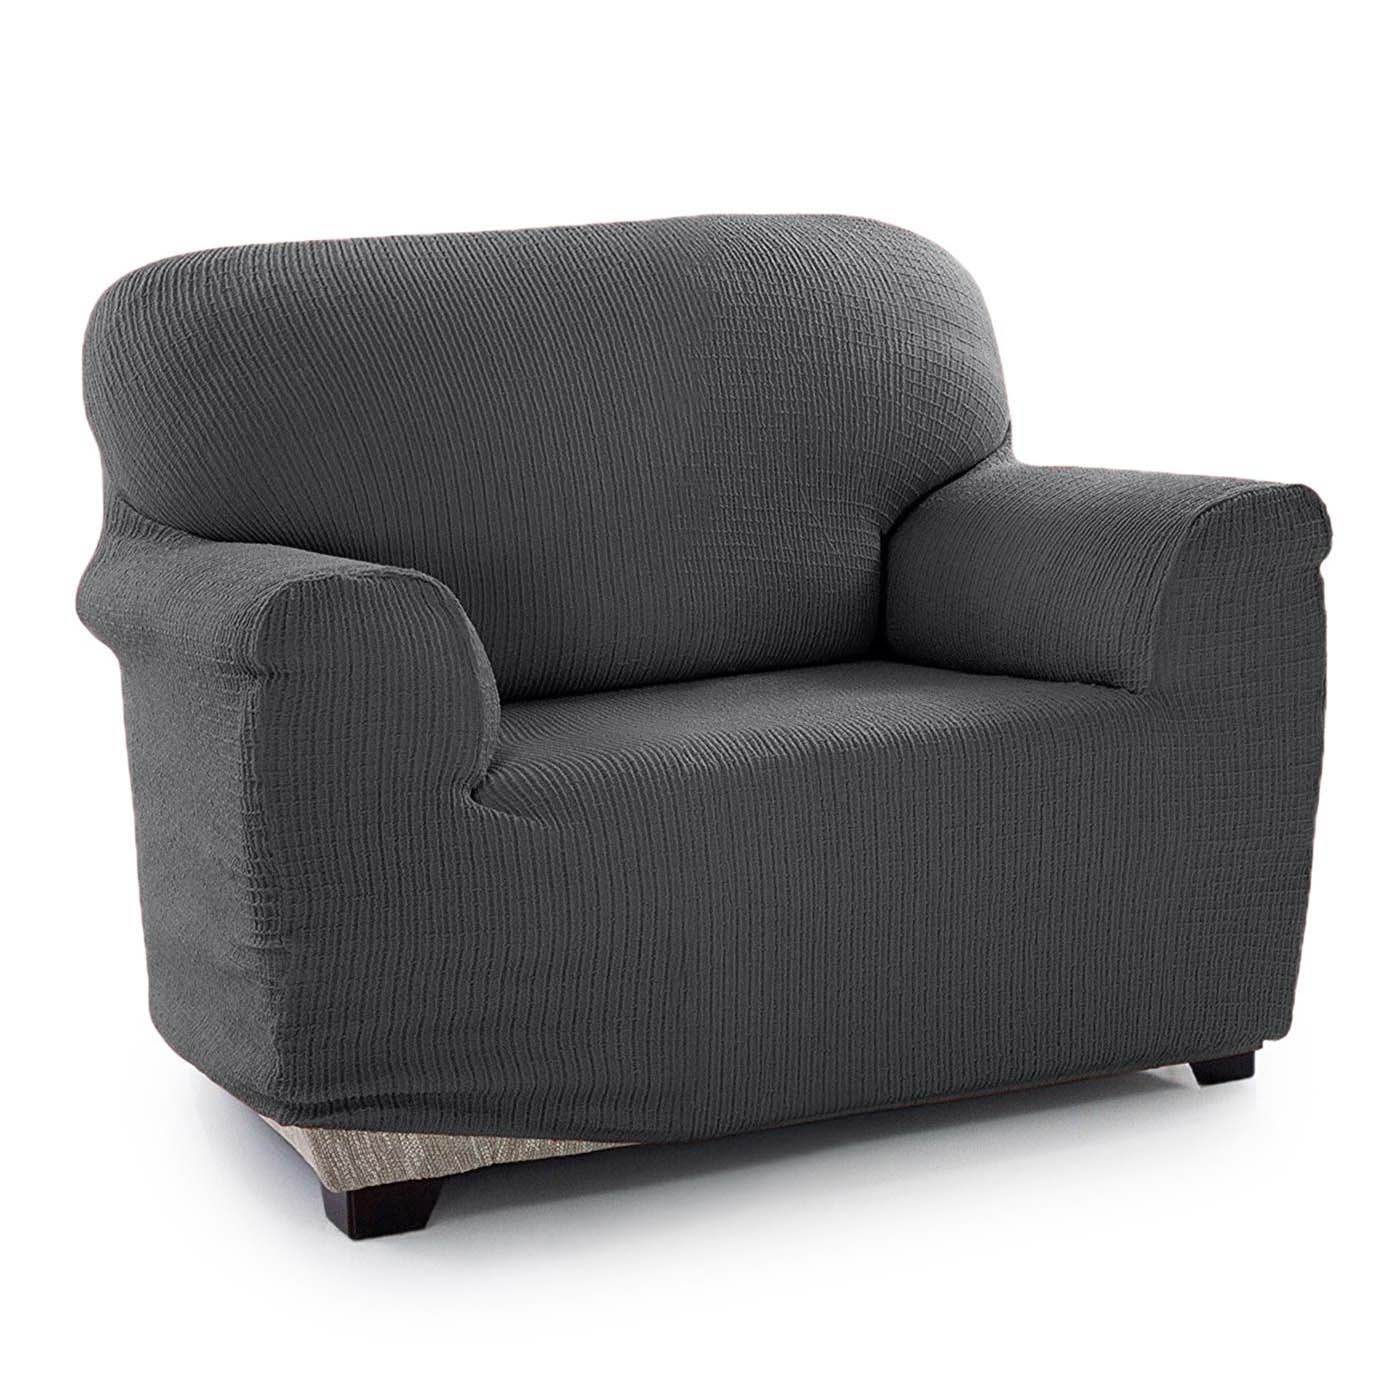 Sessel Bezug Stretch Bezug Sofabezug Ohrensessel Couchbezug Sesselbezug